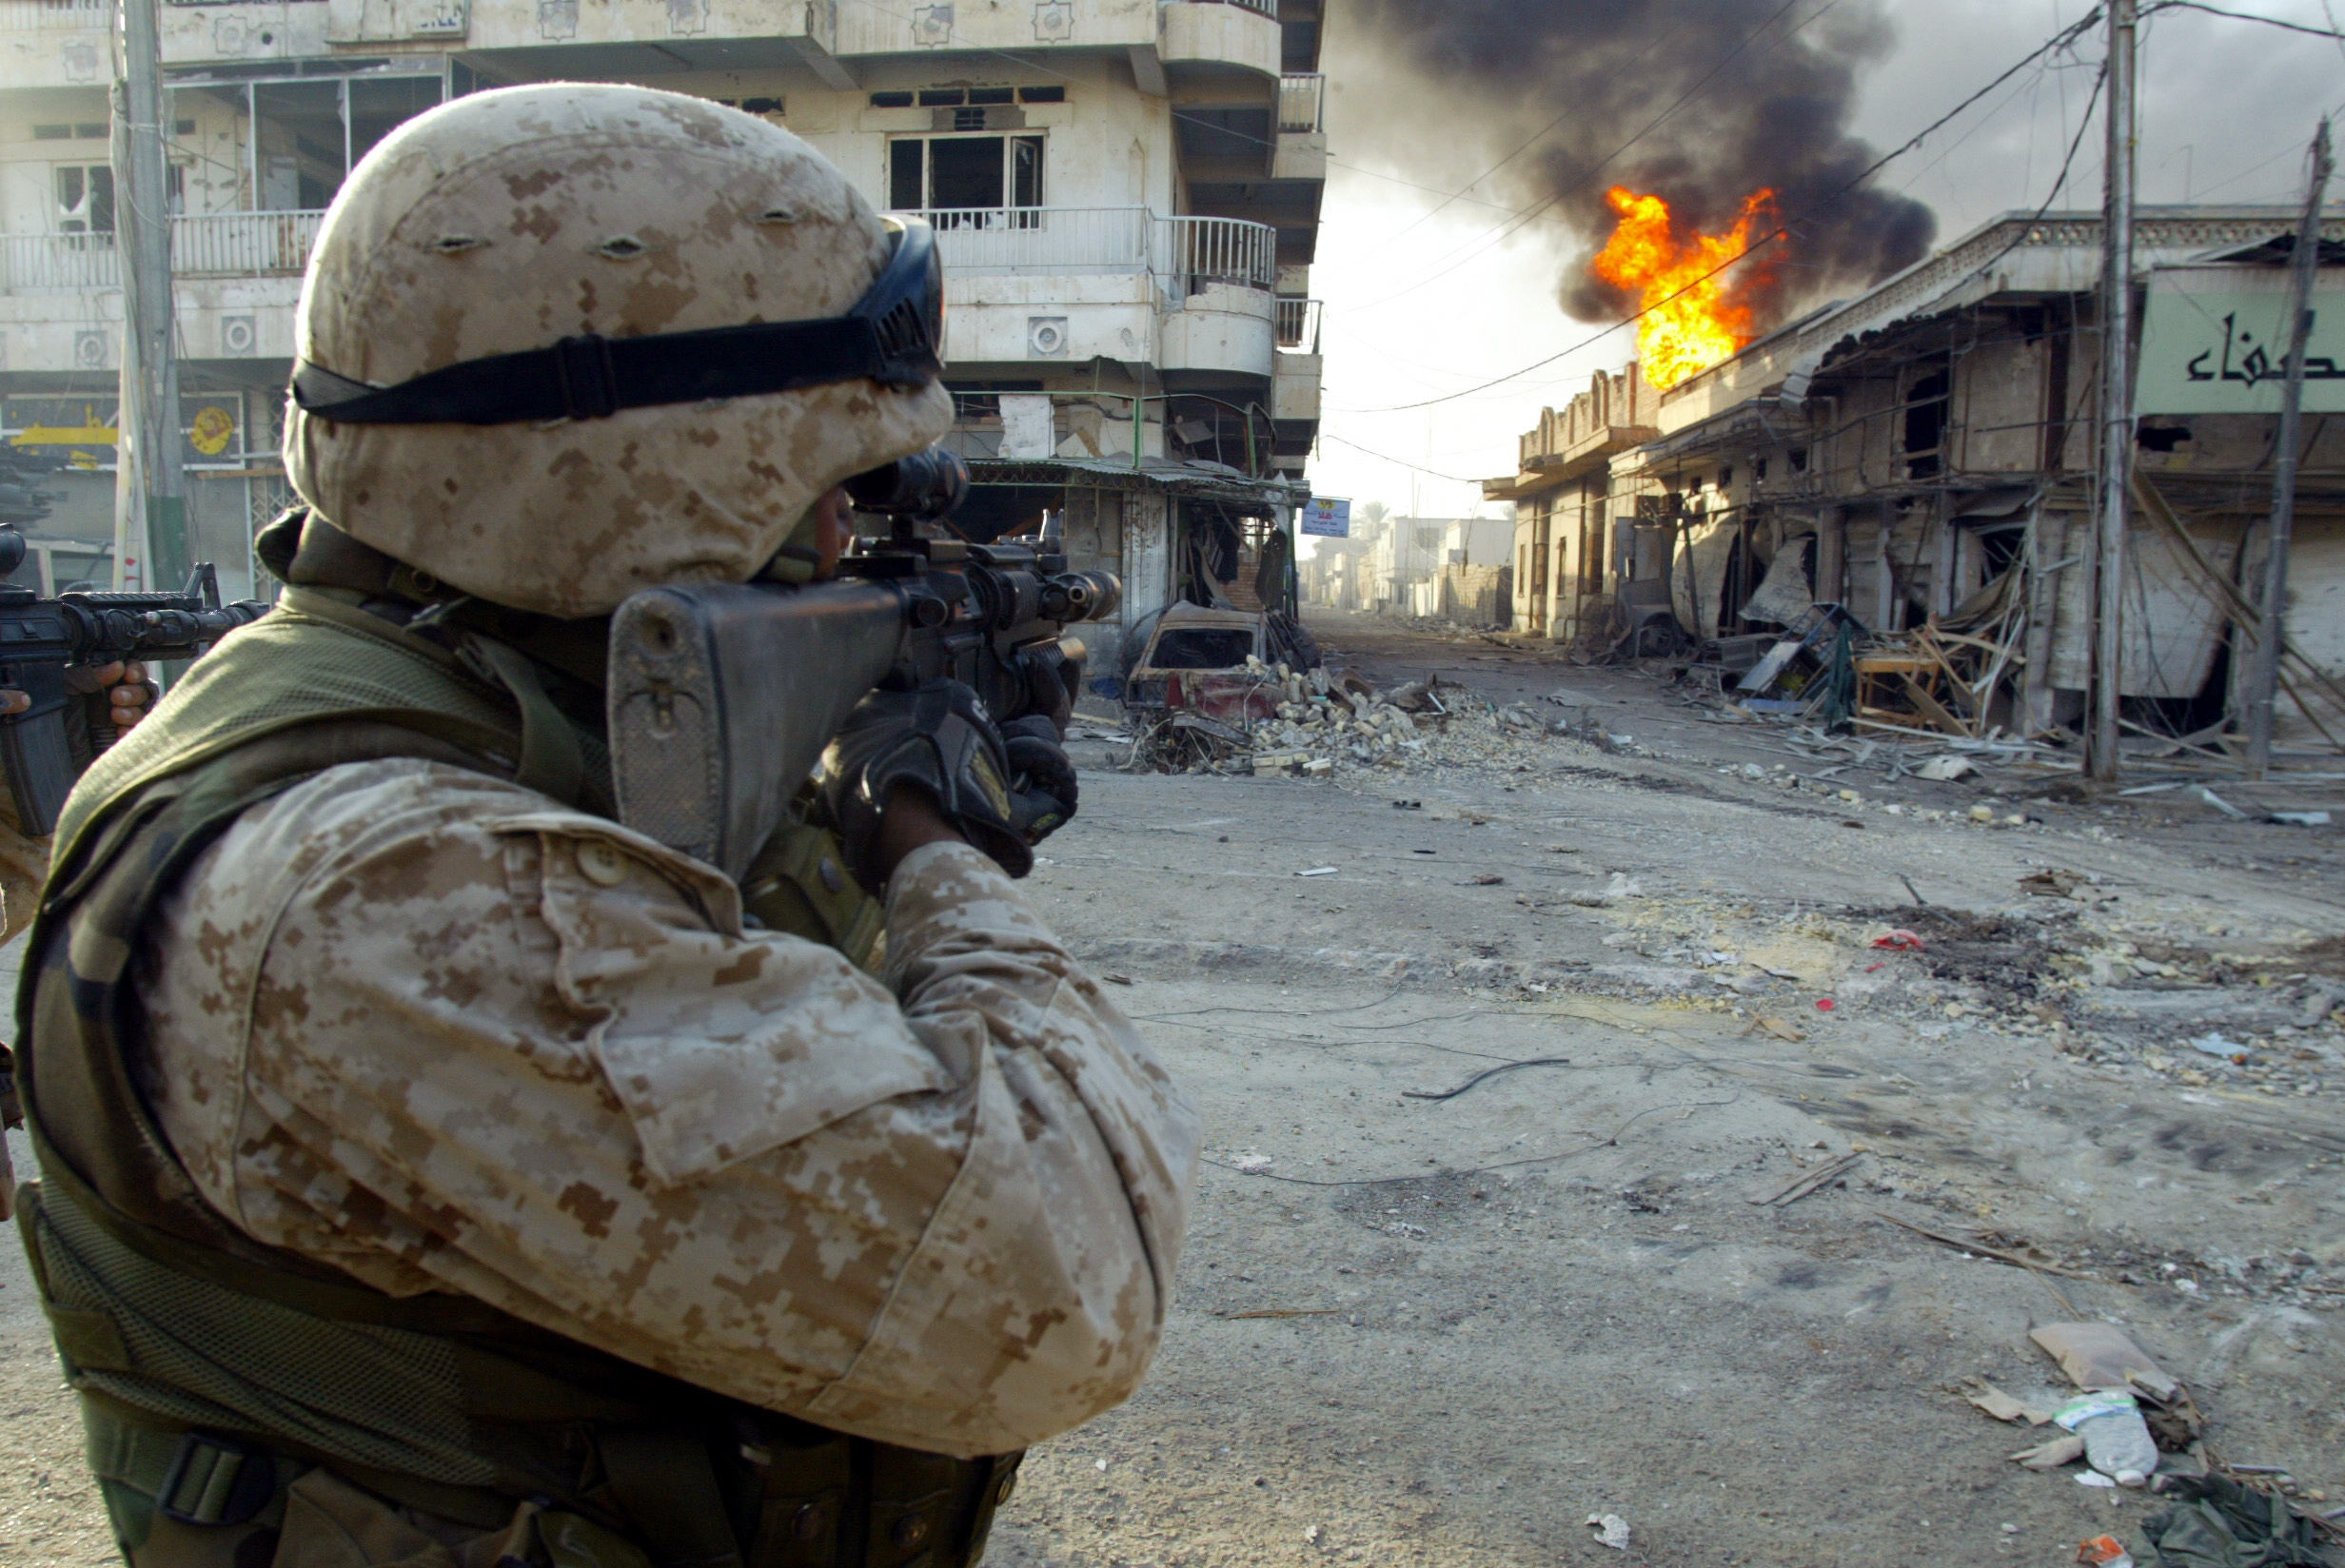 A U.S. Marine in Fallujah in November 2004. (PATRICK BAZ / AFP / Getty Images)